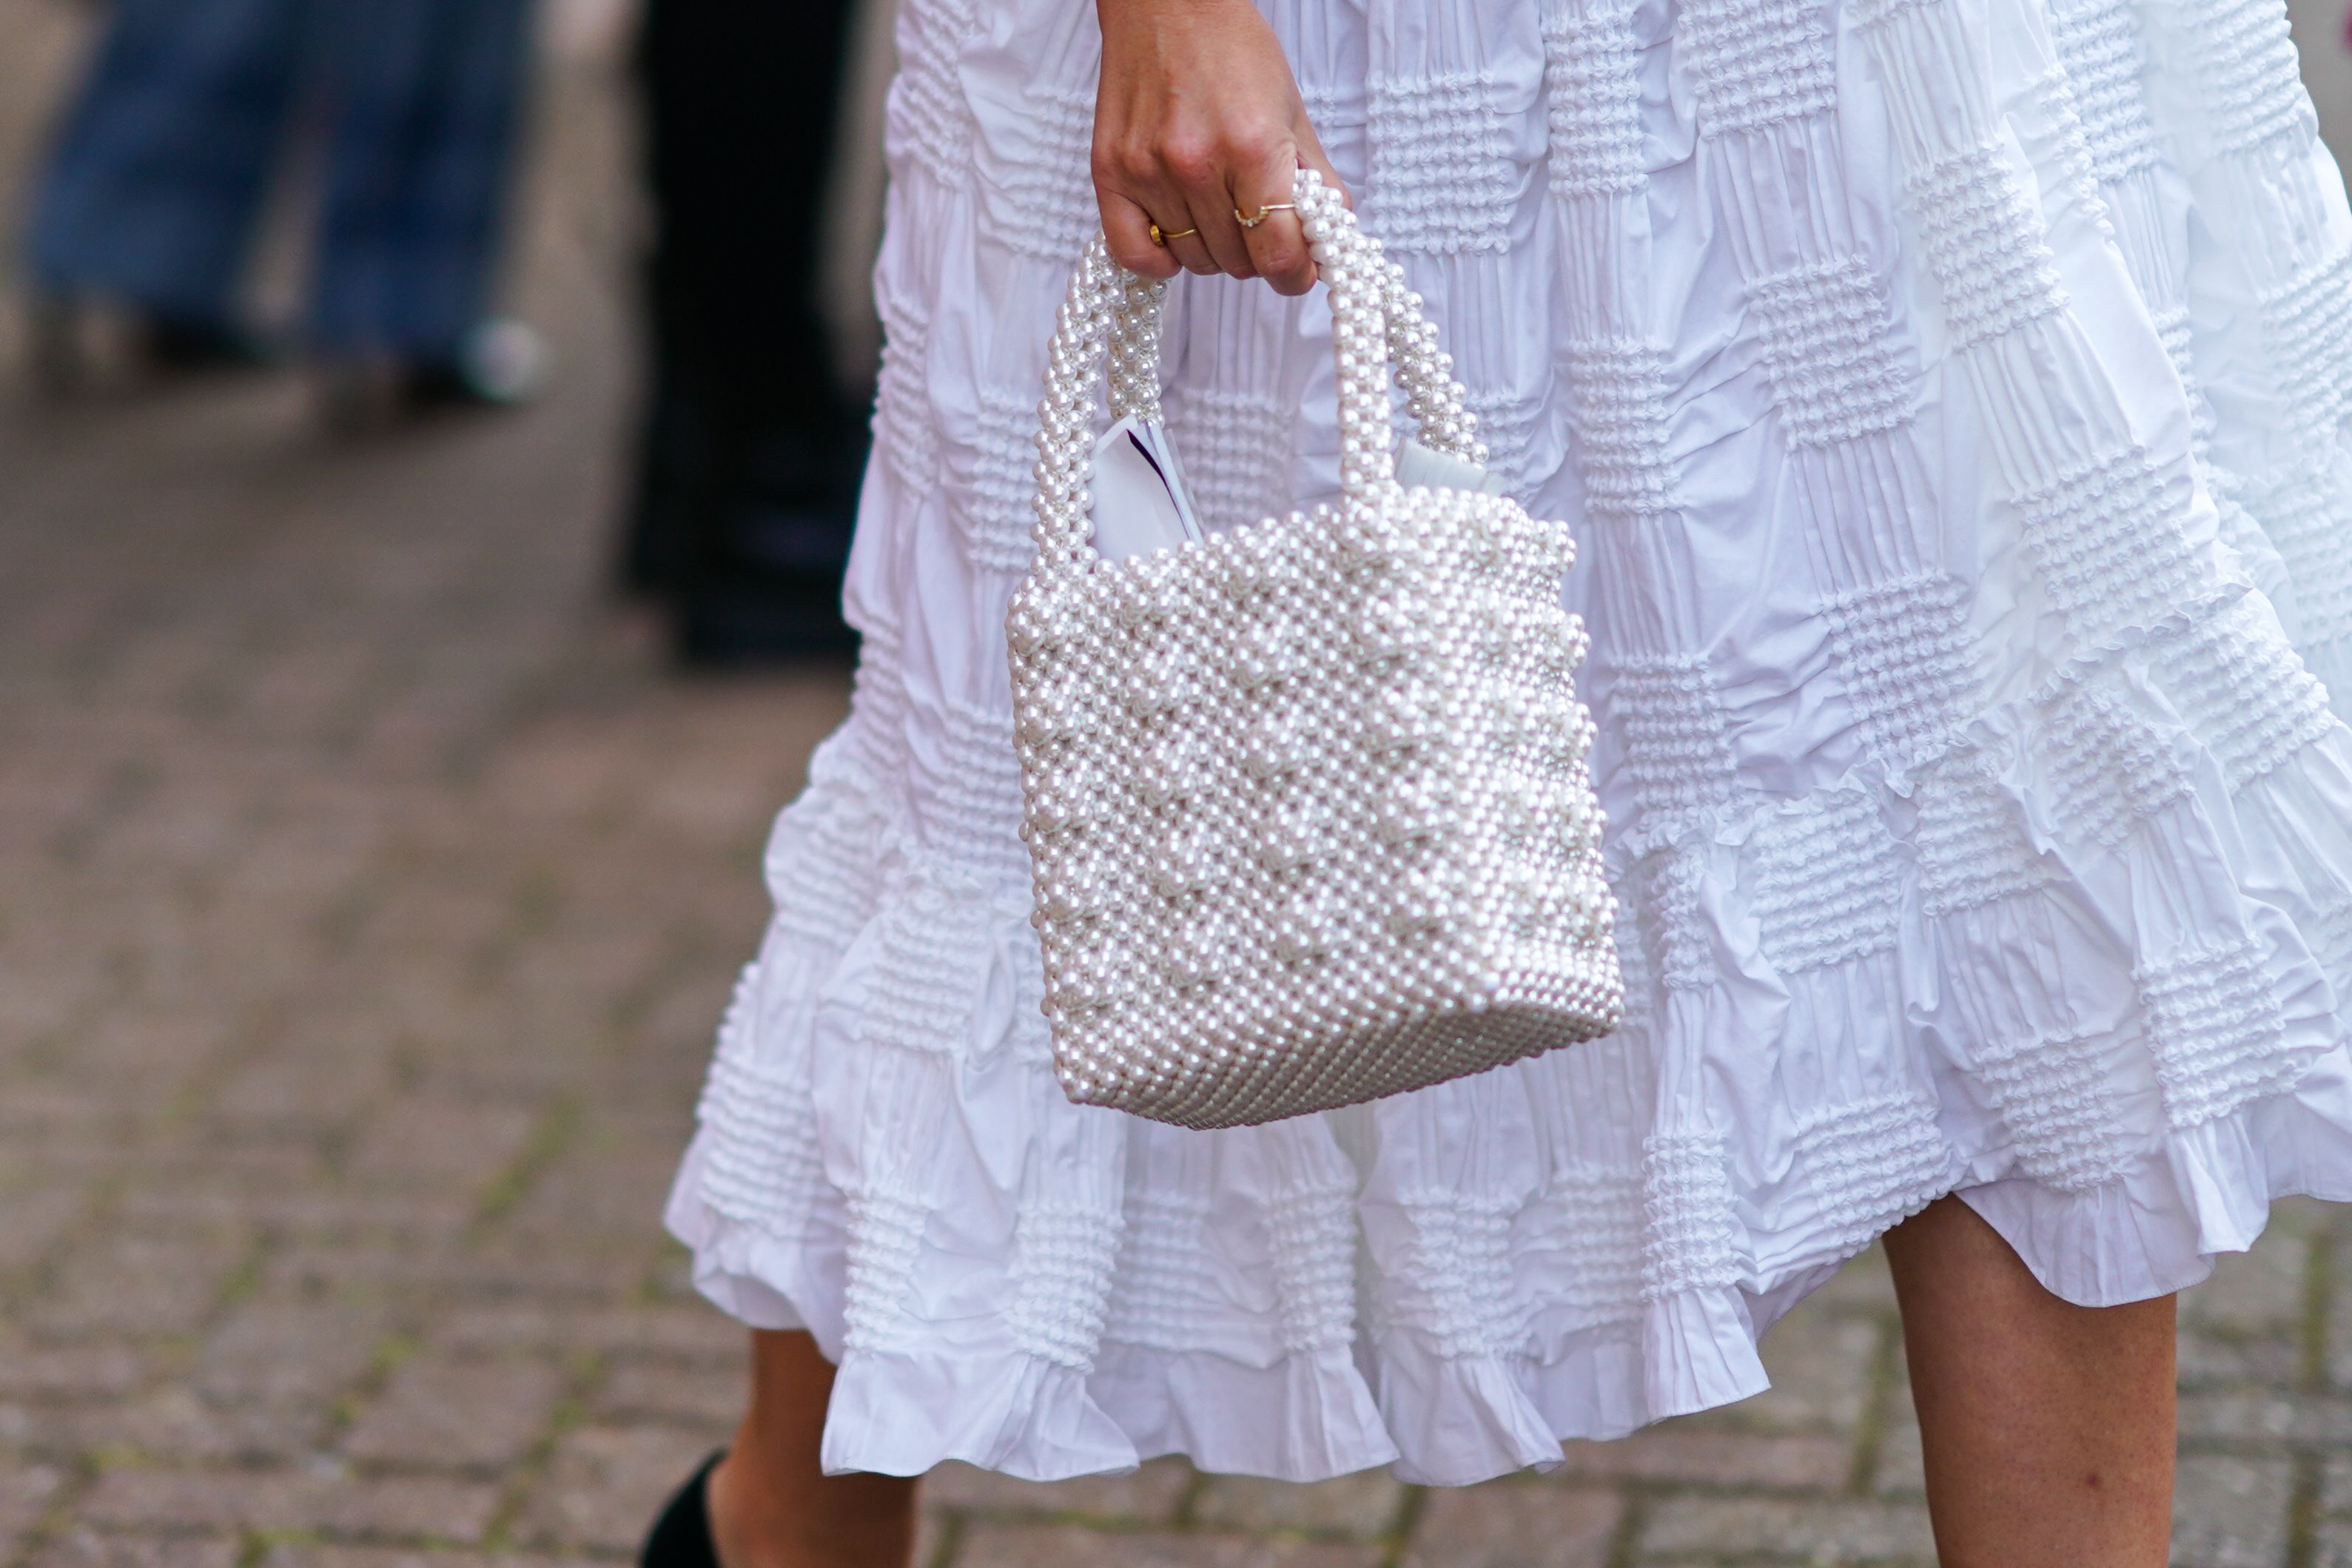 A New Day Pearl Shoulder Handbag Purse | eBay